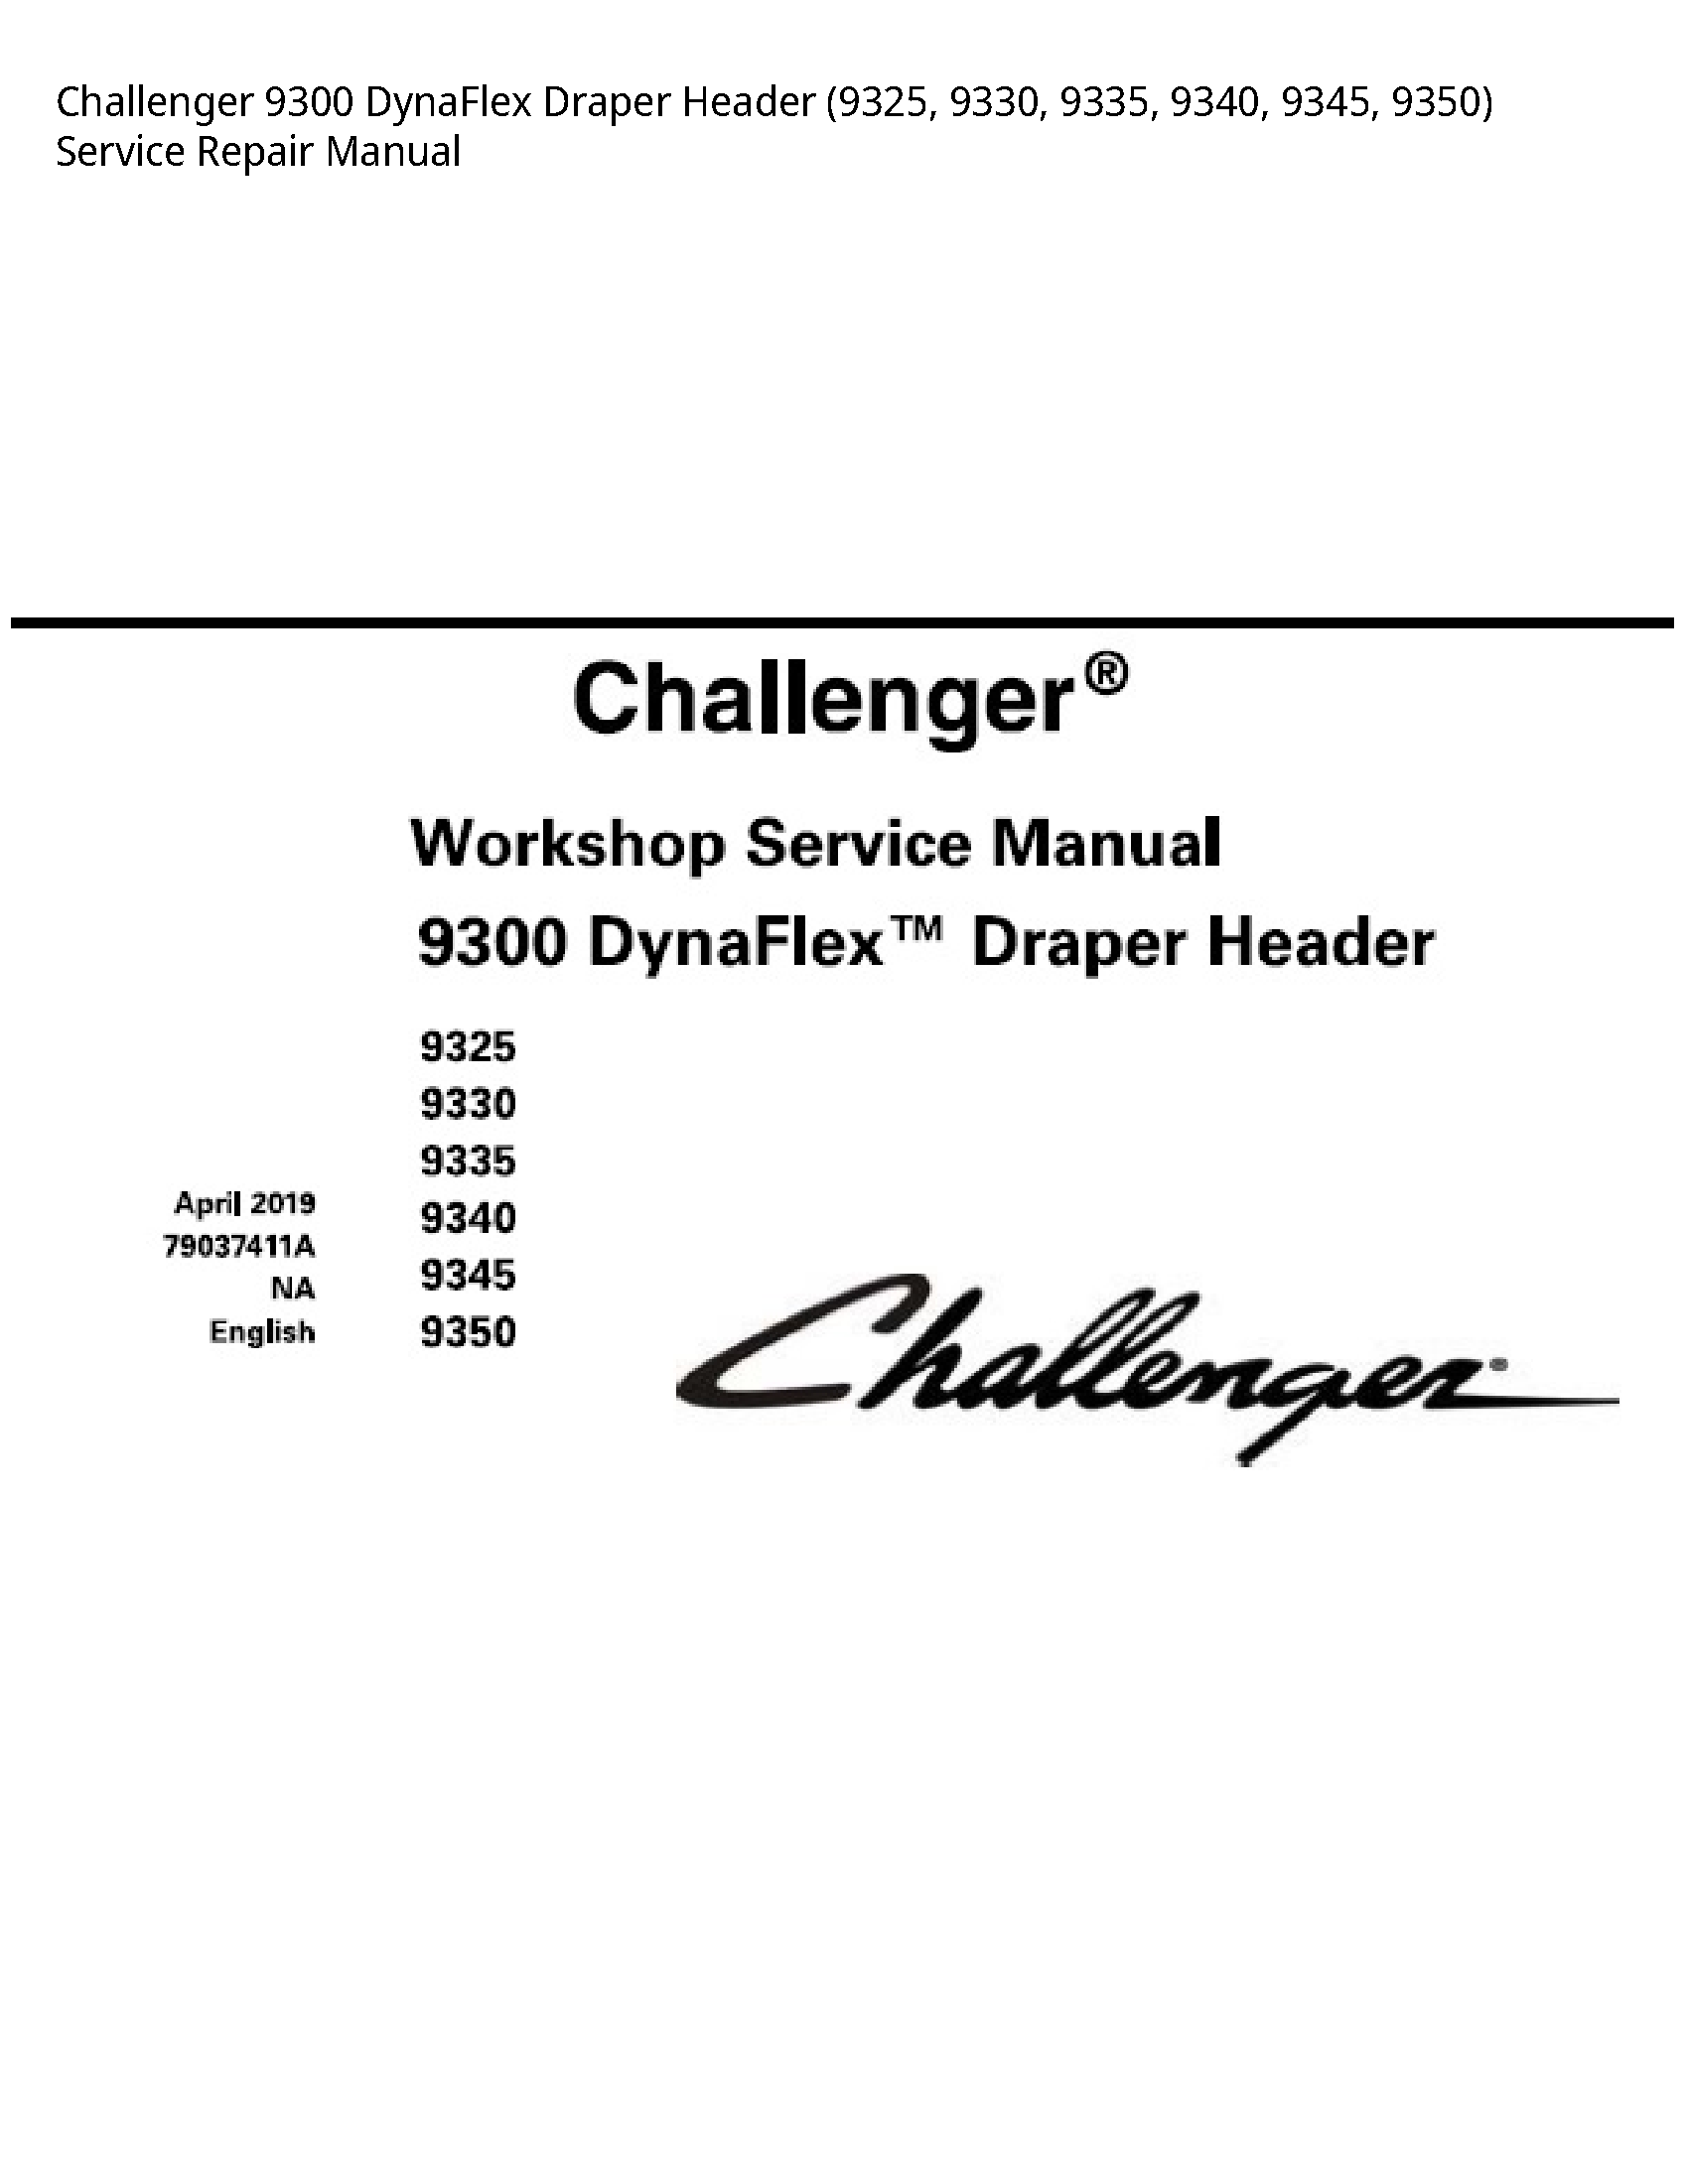 Challenger 9300 DynaFlex Draper Header manual